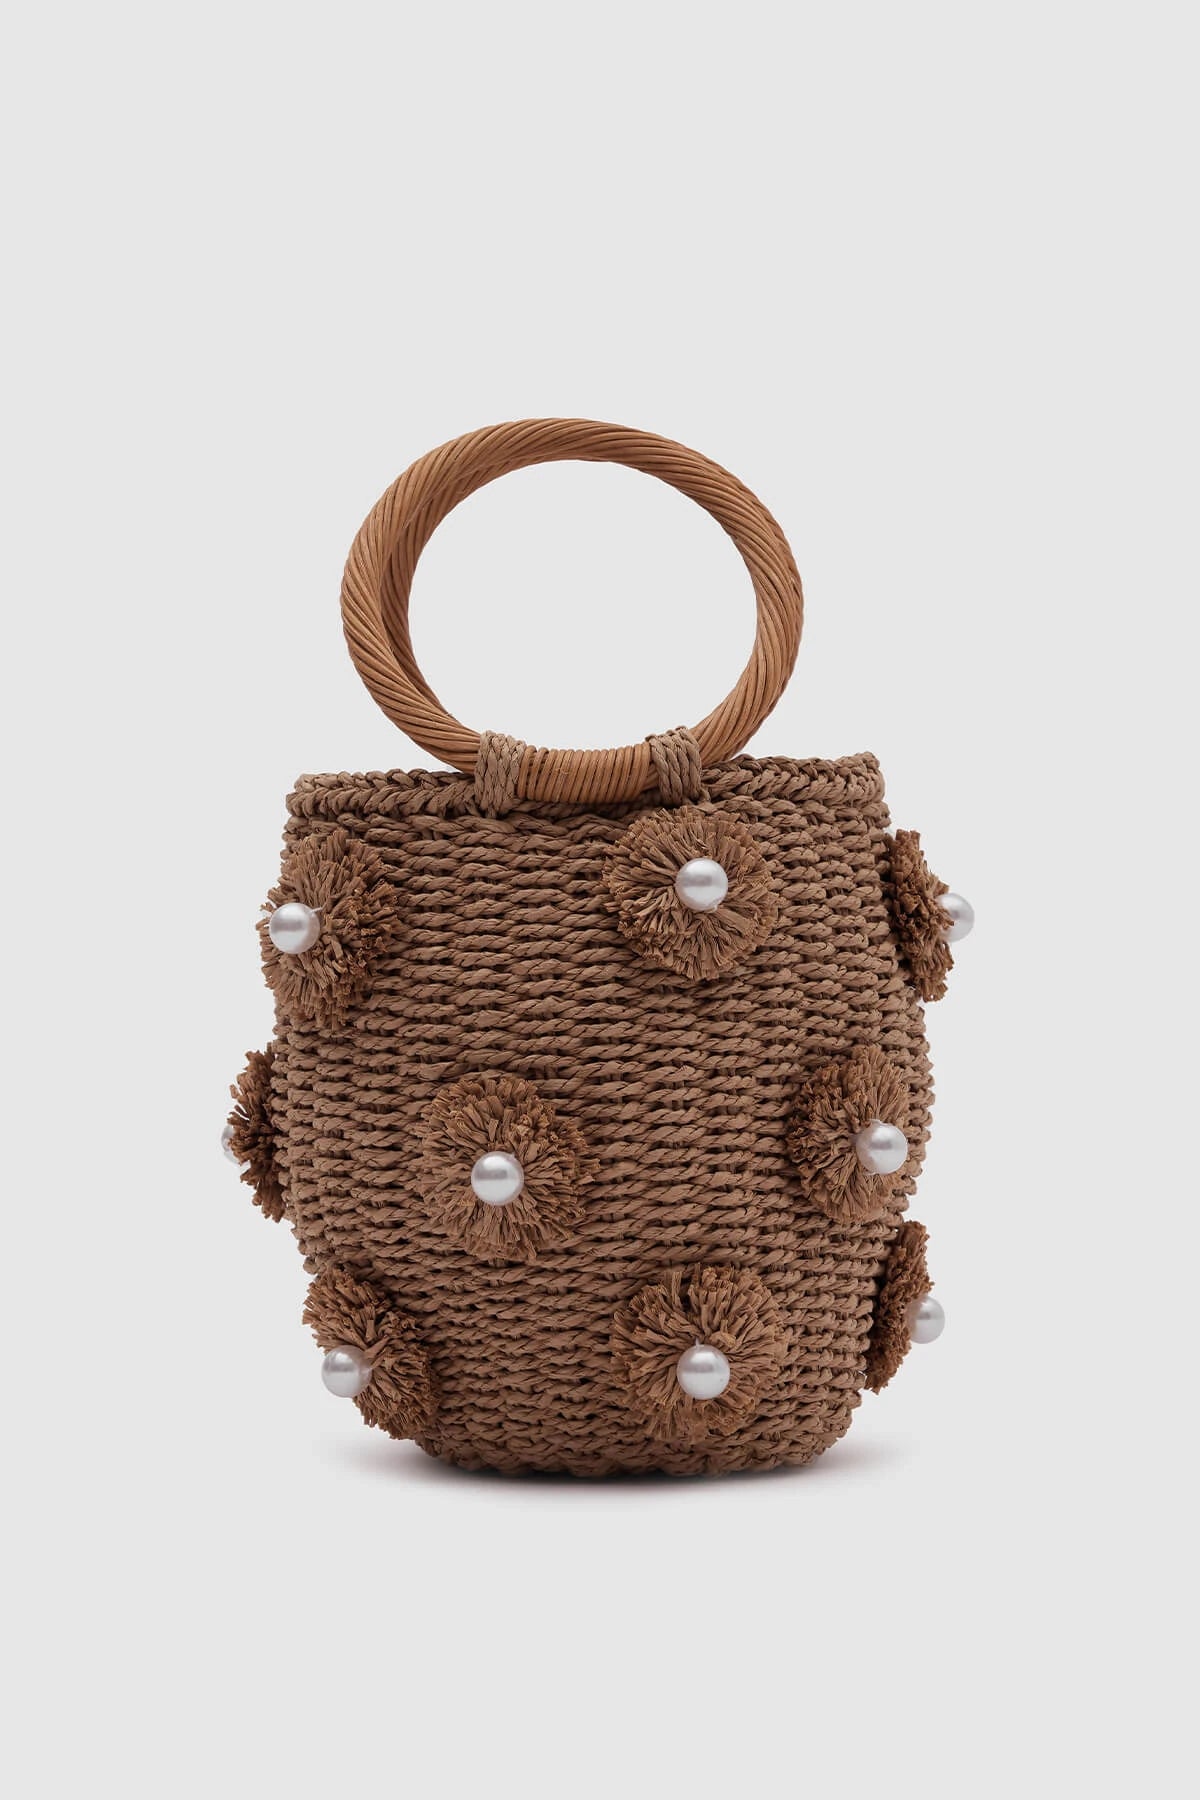 Wooden Handle Basket Straw Bag straw bags LUNARITY GARAGE Camel  